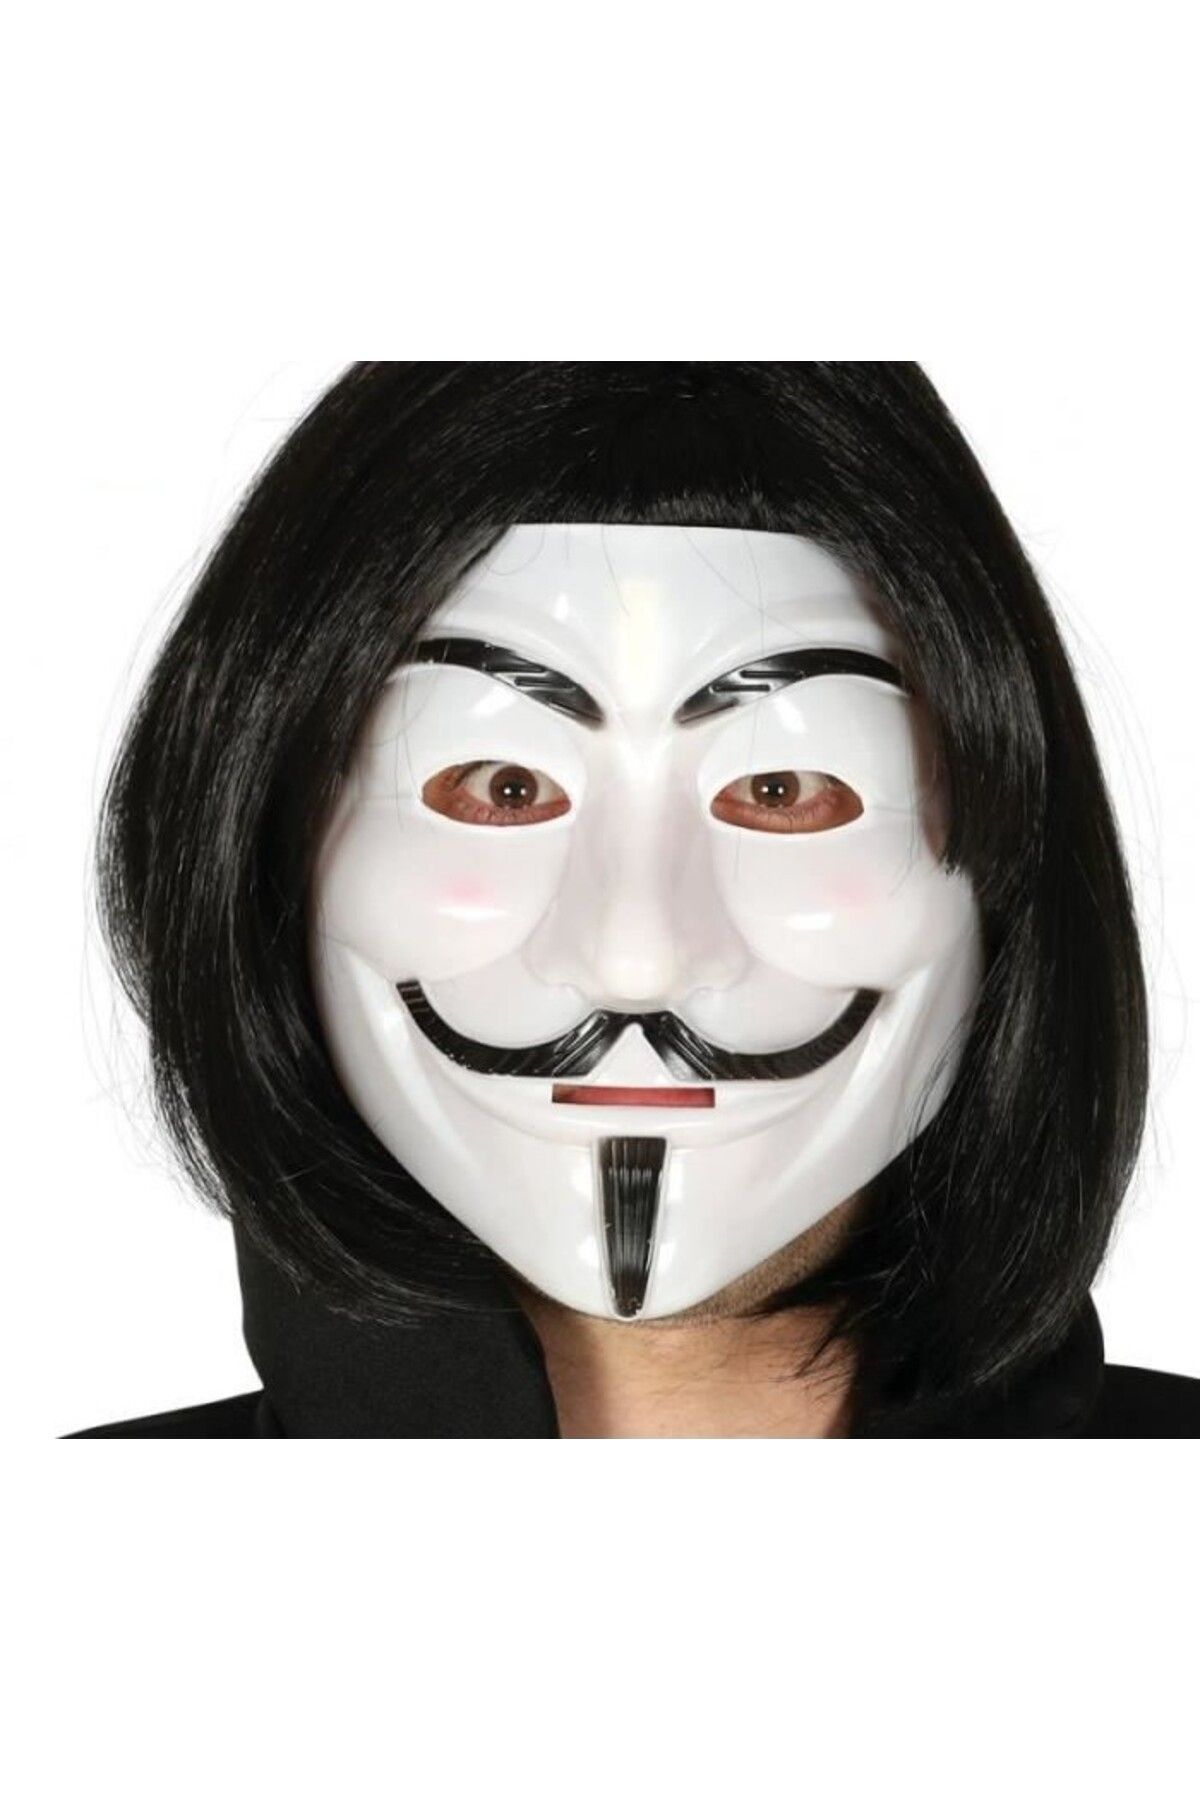 Zenonline Siyah Renk Takma Kısa Saç Ve V For Vendetta Maskesi Anonymous Maskesi